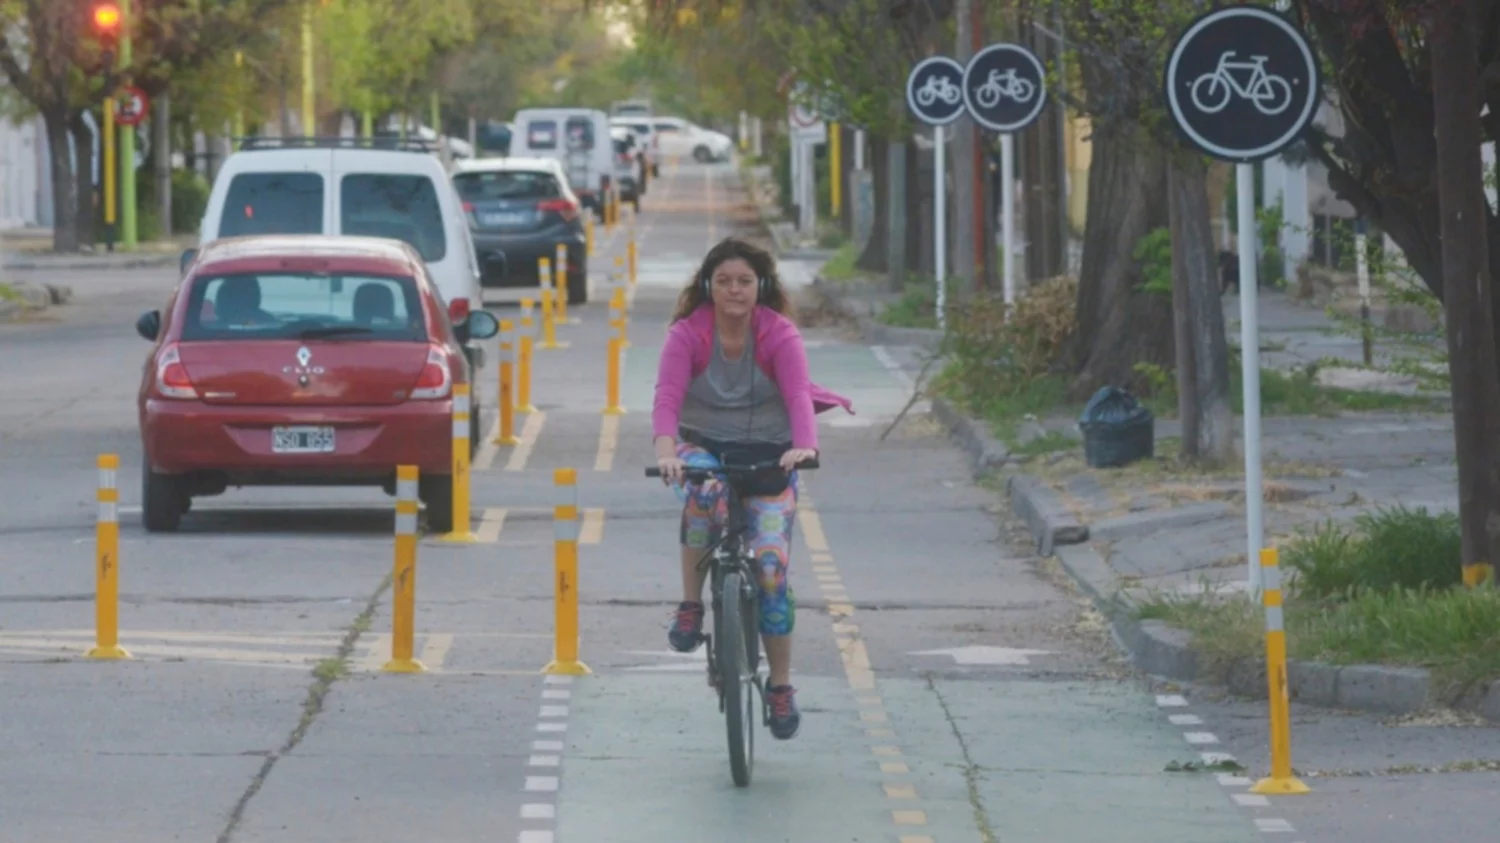 Aseguran que en 2022 construirán 10 kilómetros más de ciclovías en Bahía Blanca